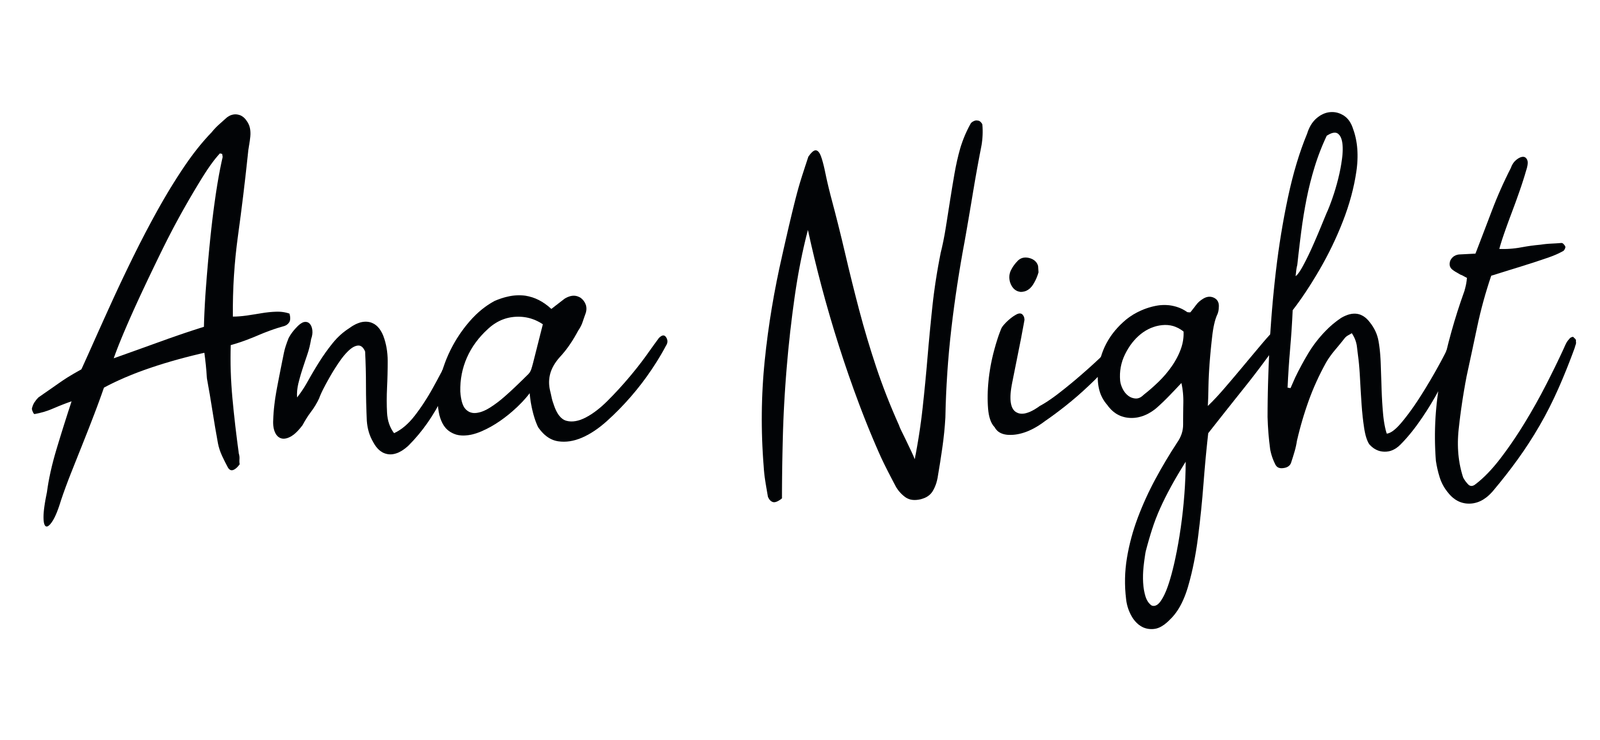 Author Ana Night